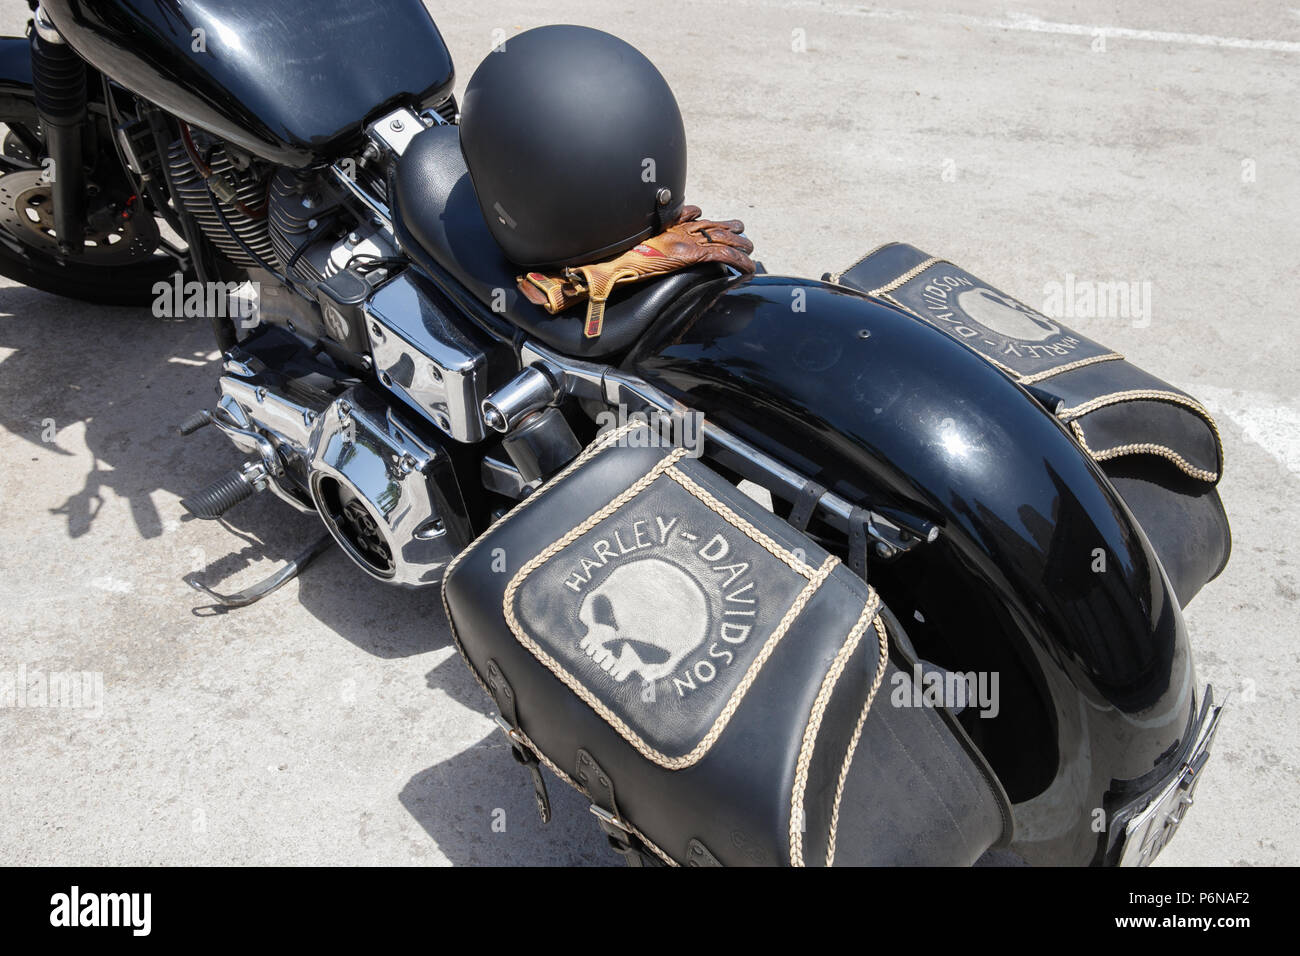 Casco de moto Harley Davidson Fotografía de stock - Alamy